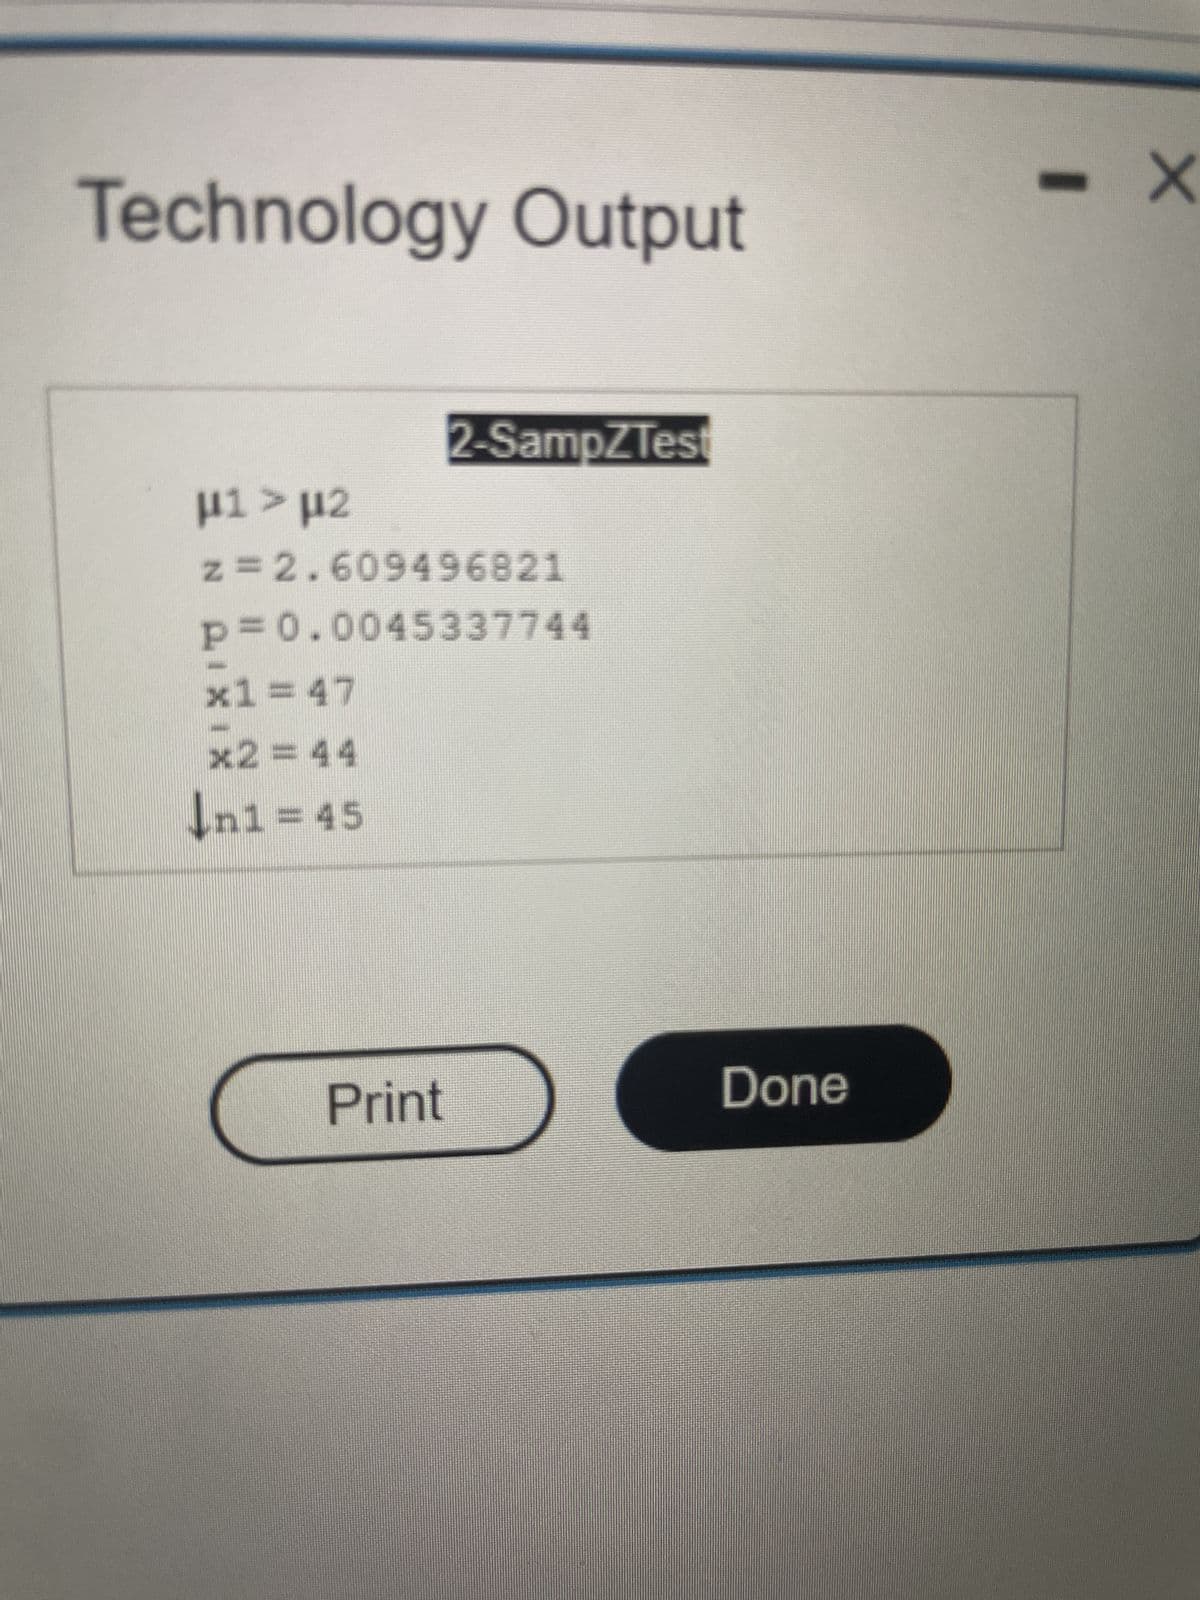 Technology Output
µ1 > µ2
z=2.609496821
P=0.0045337744
x1=47
x2 = 44
↓n1=45
2-SampZTest
Print
Done
-
X